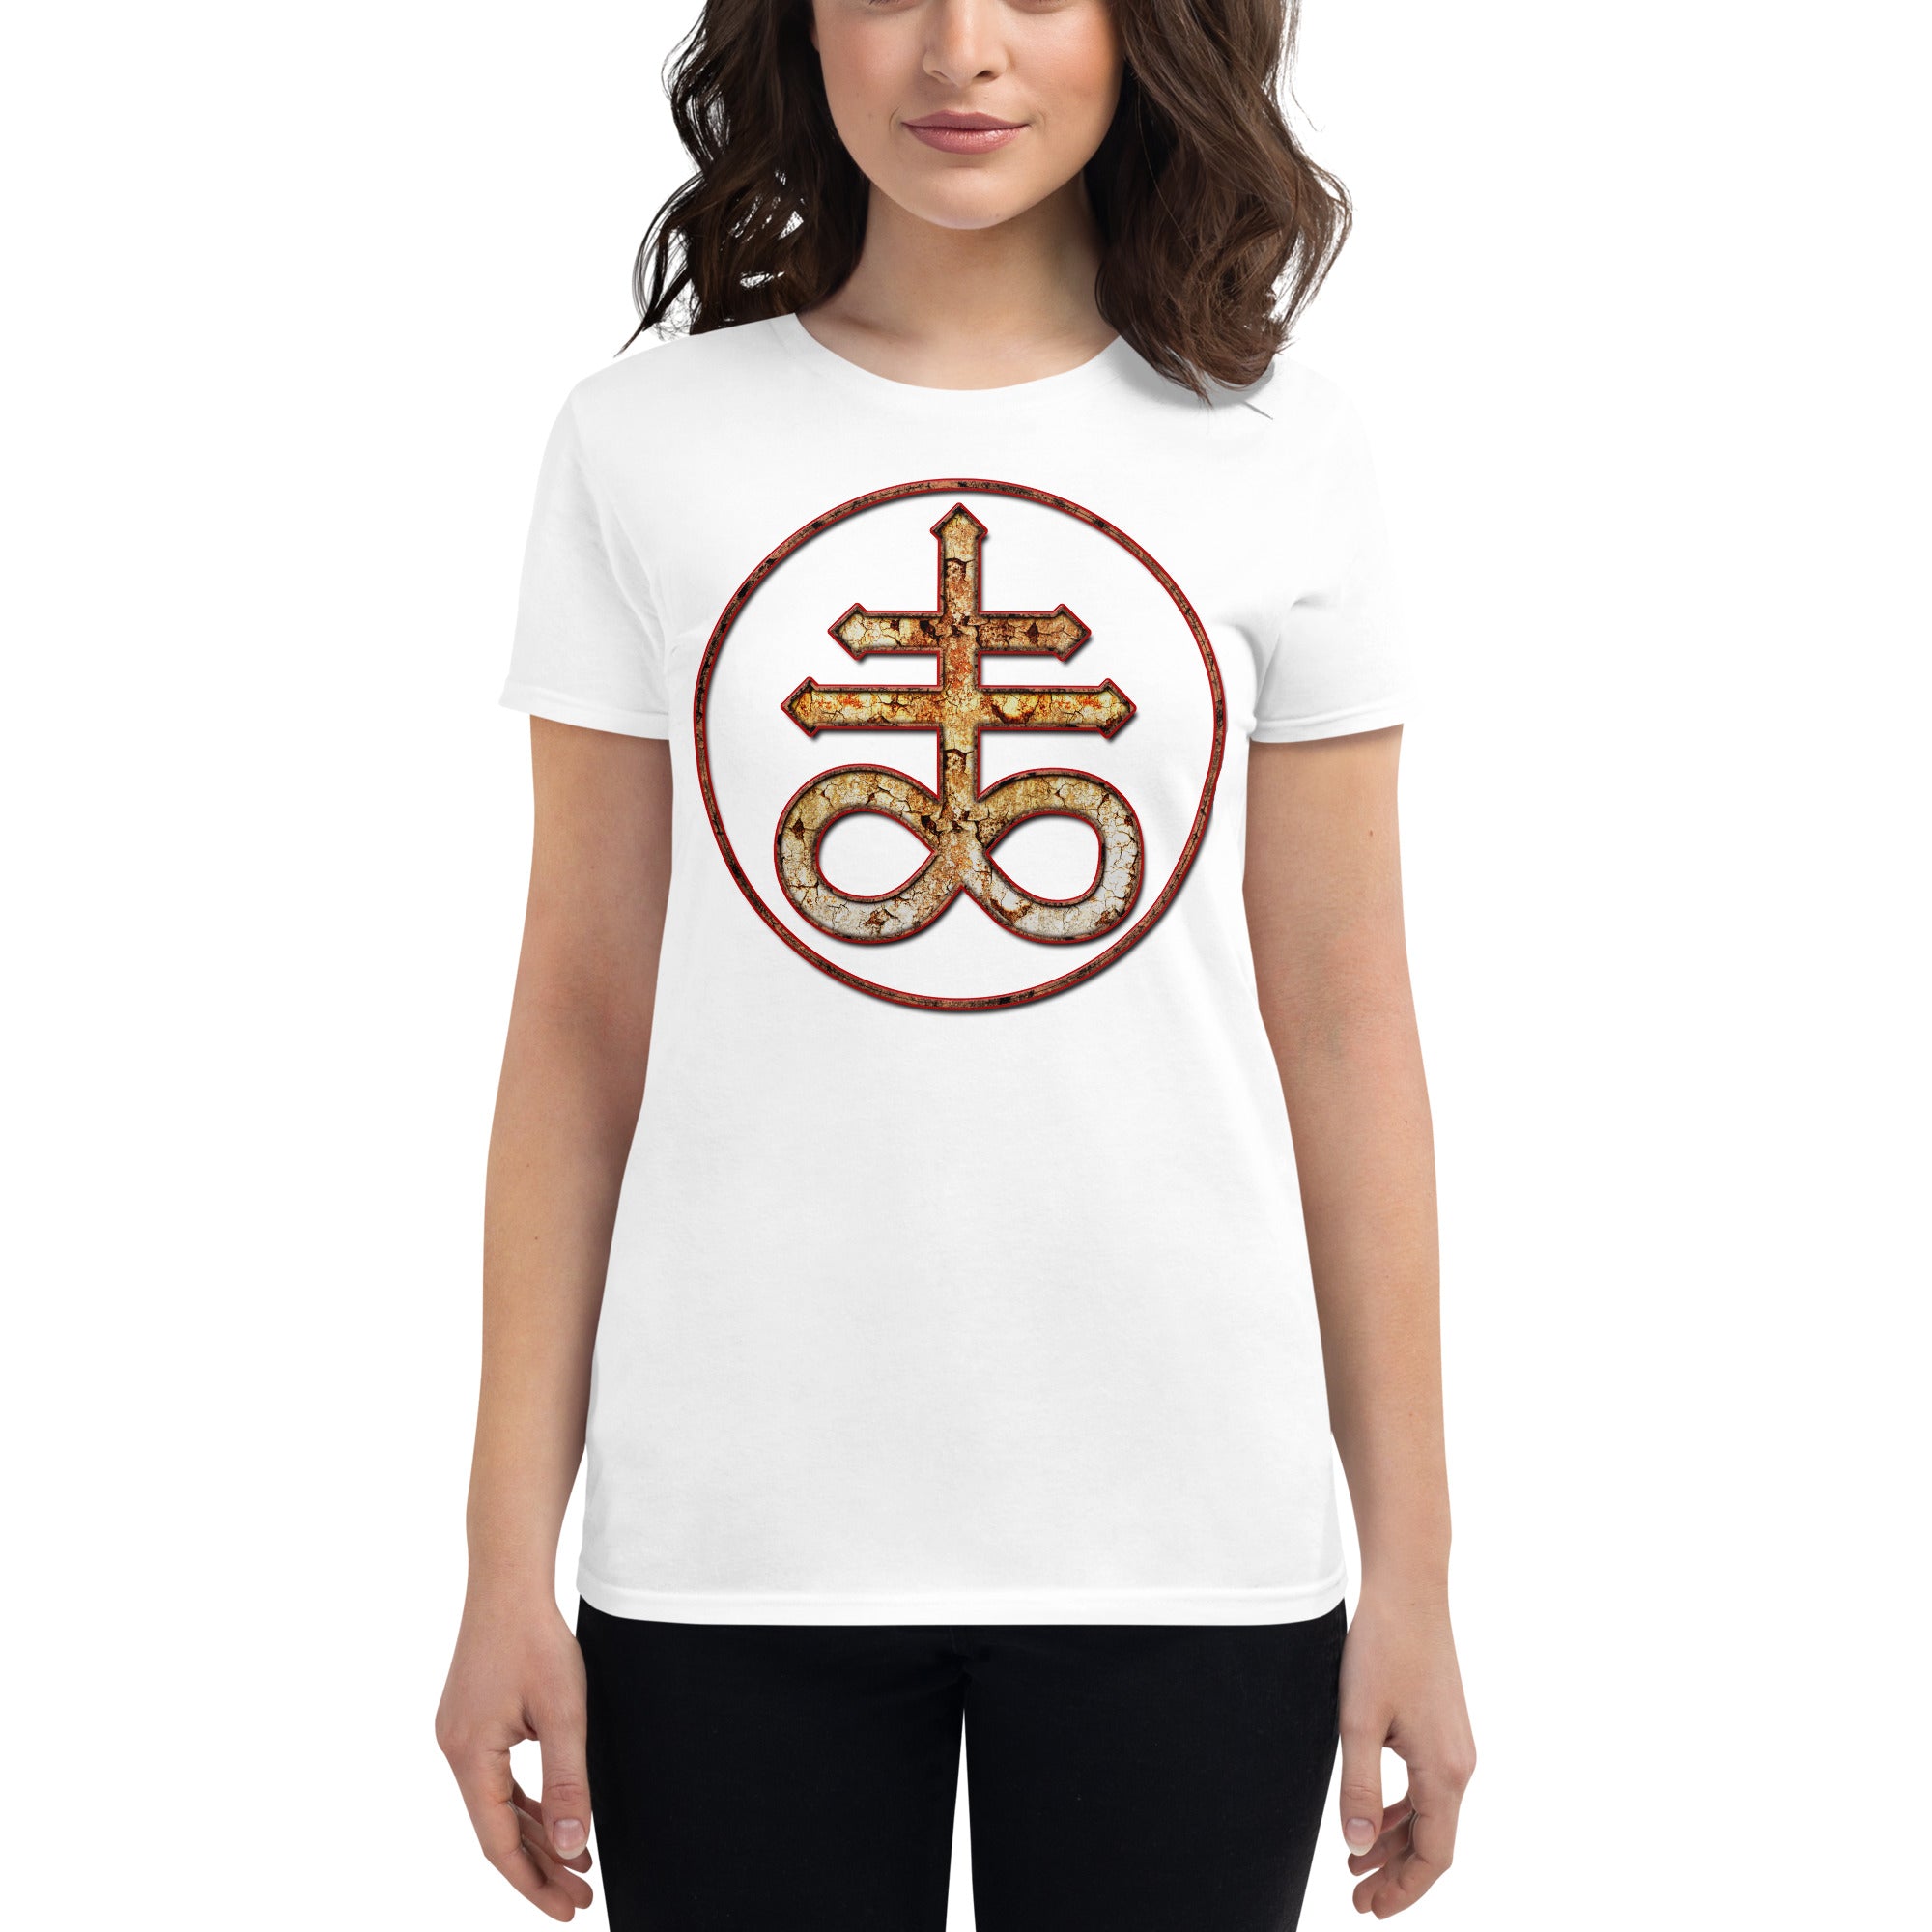 Withered Evil Satan's Cross Leviathan Symbol Women's Short Sleeve Babydoll T-shirt